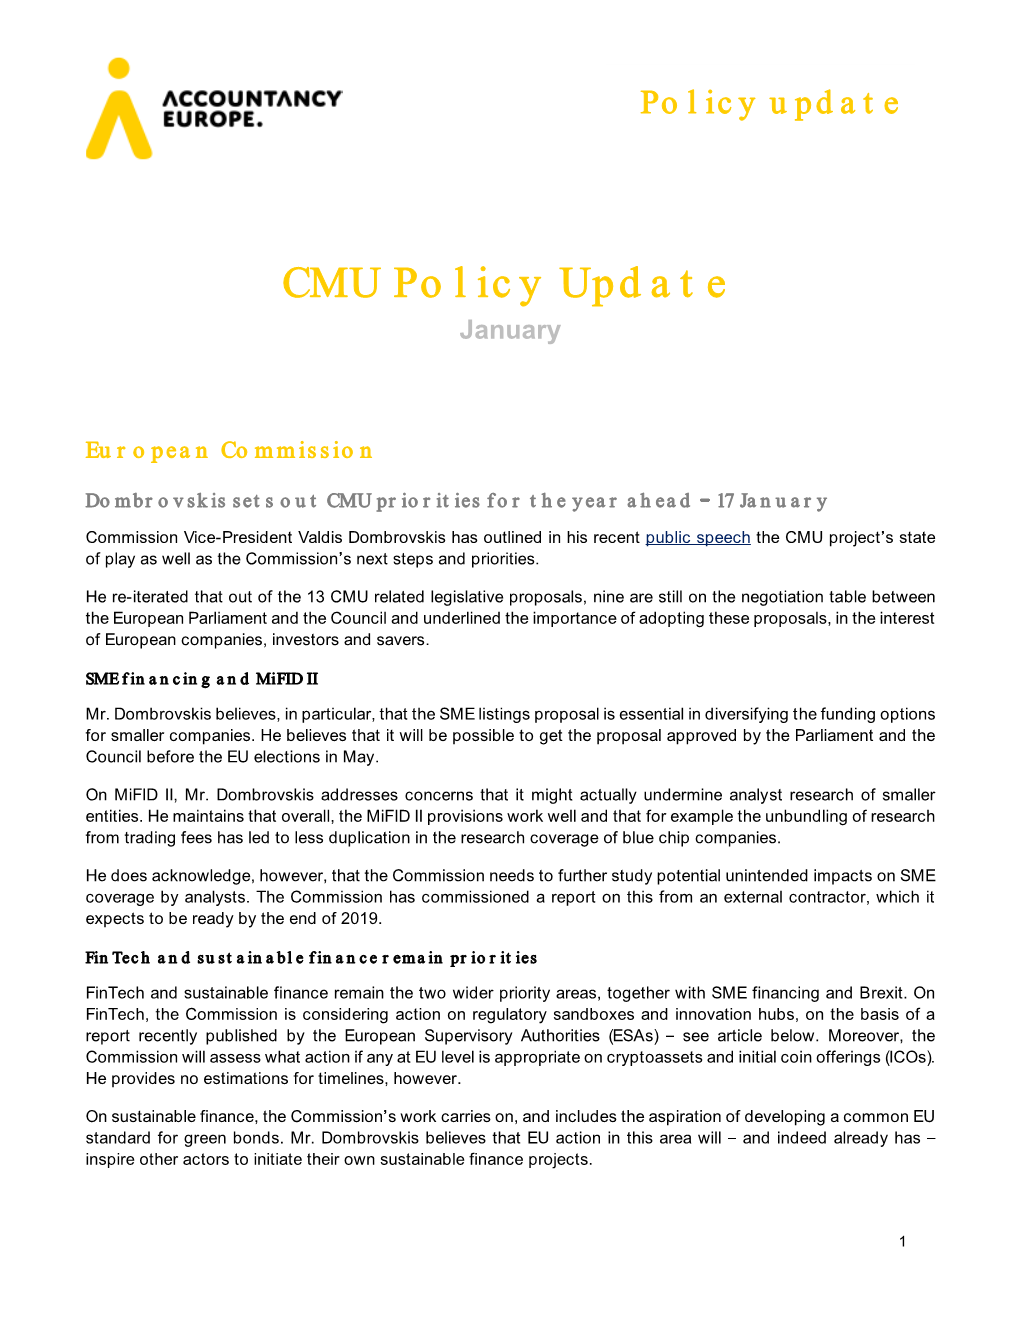 CMU Policy Update January